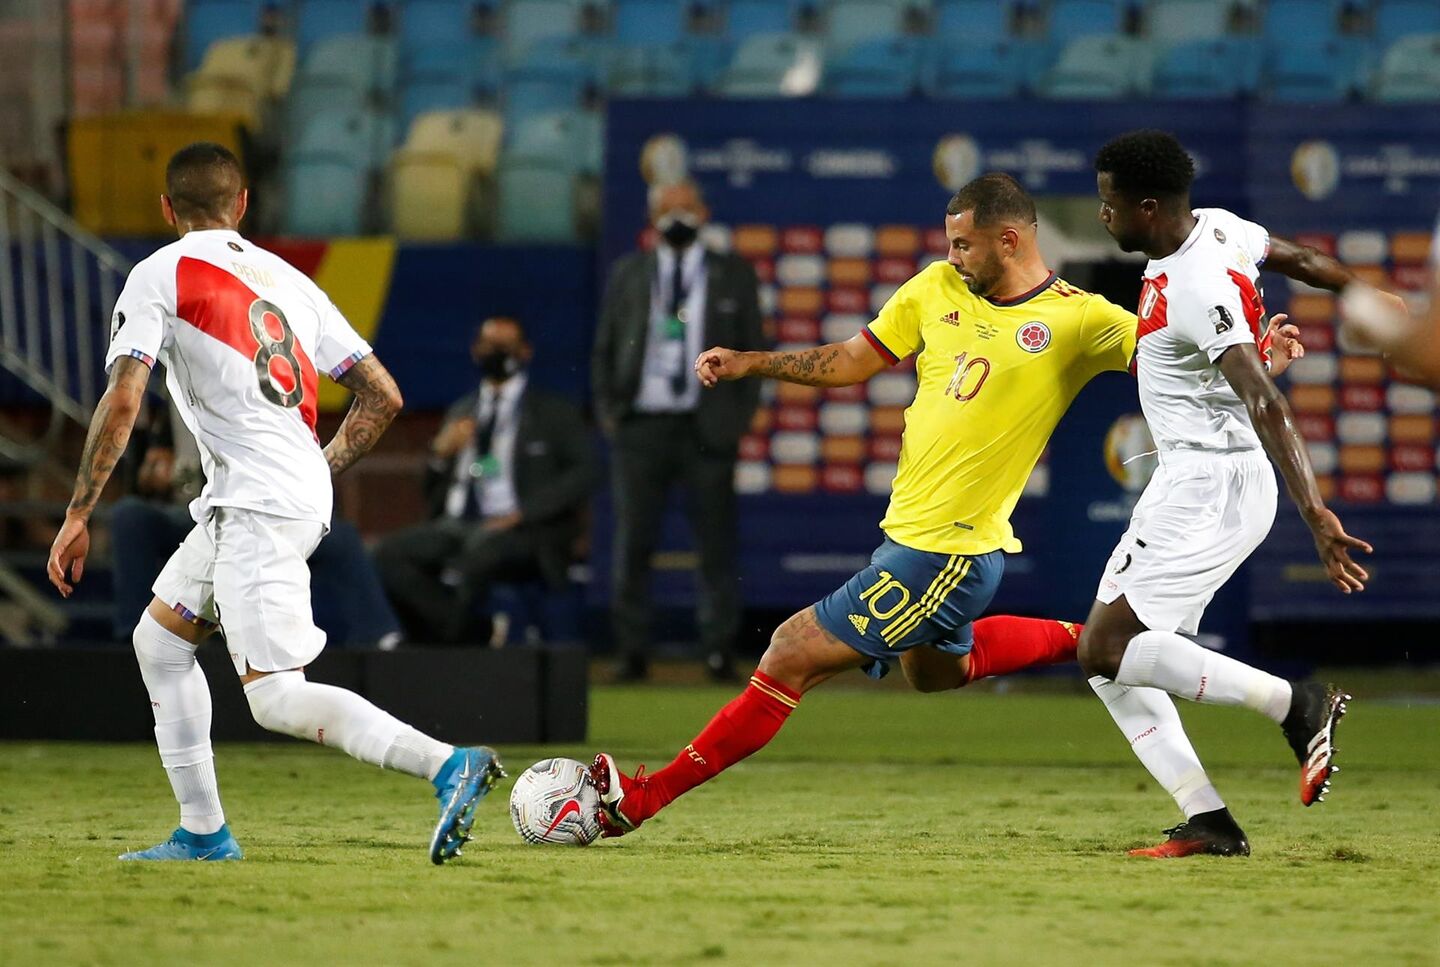 Pronóstico 09/07: Colombia – Perú (Copa América)